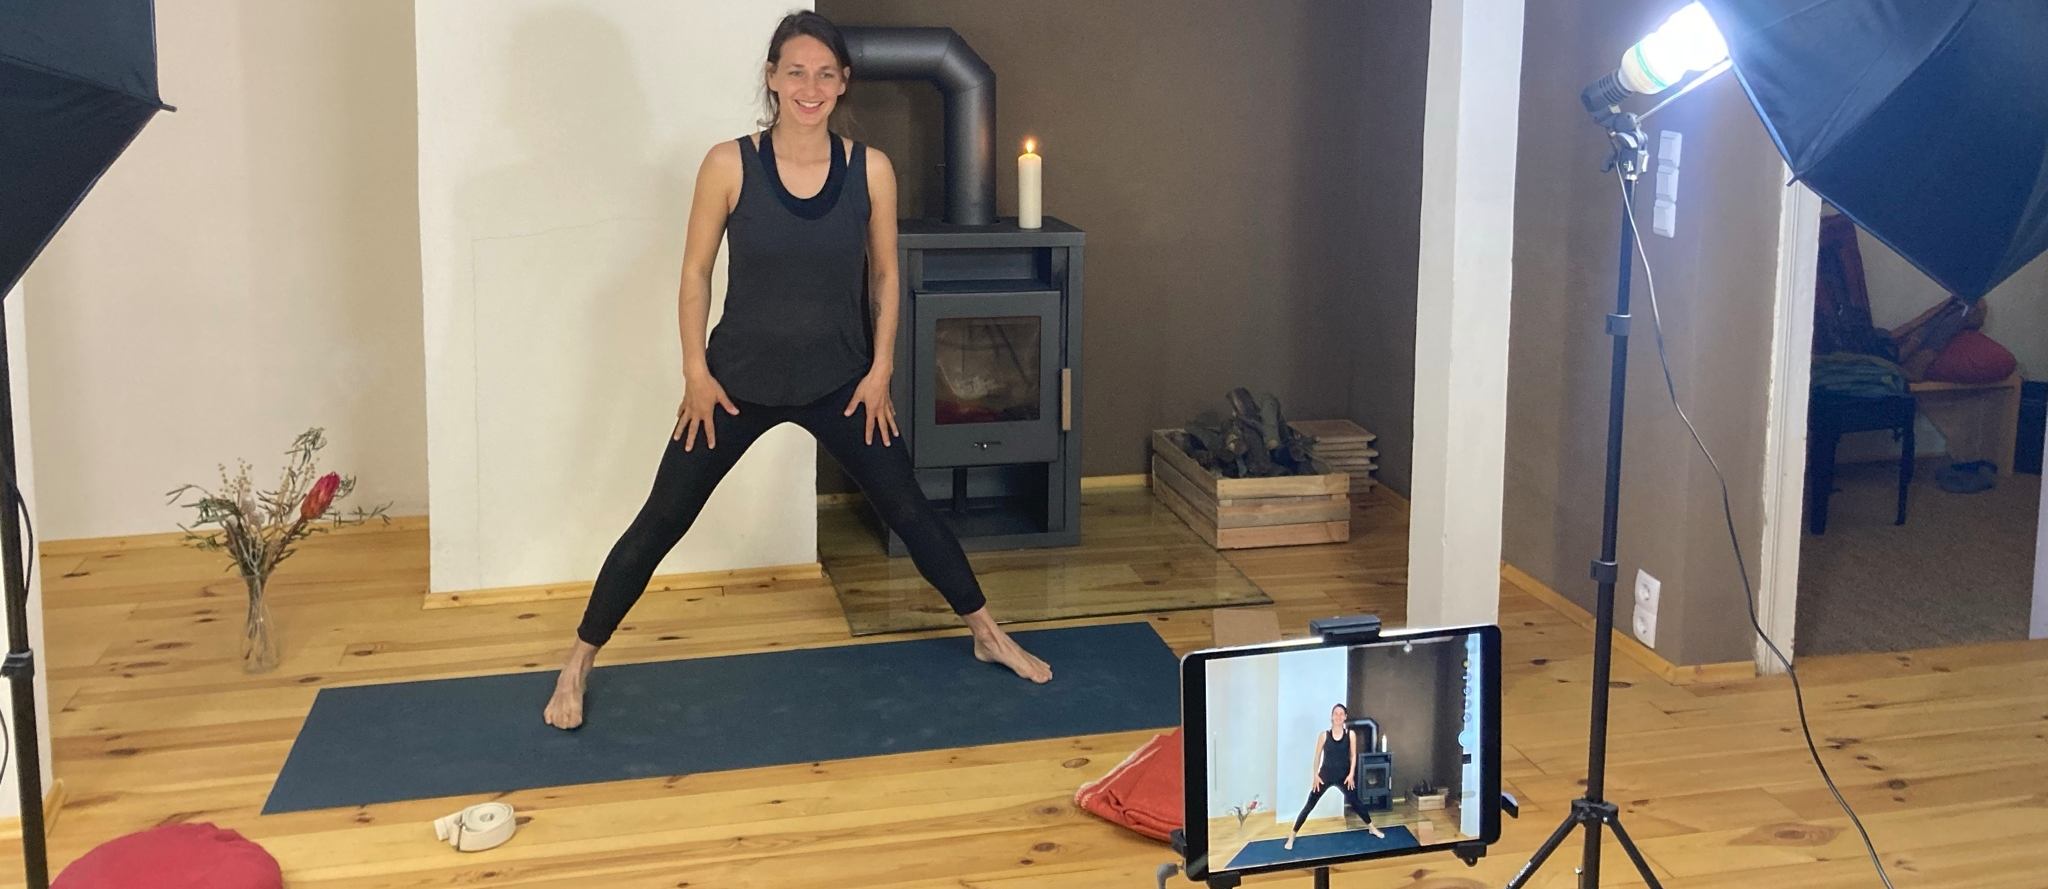 yoga-videothek-sofie-aufnahme